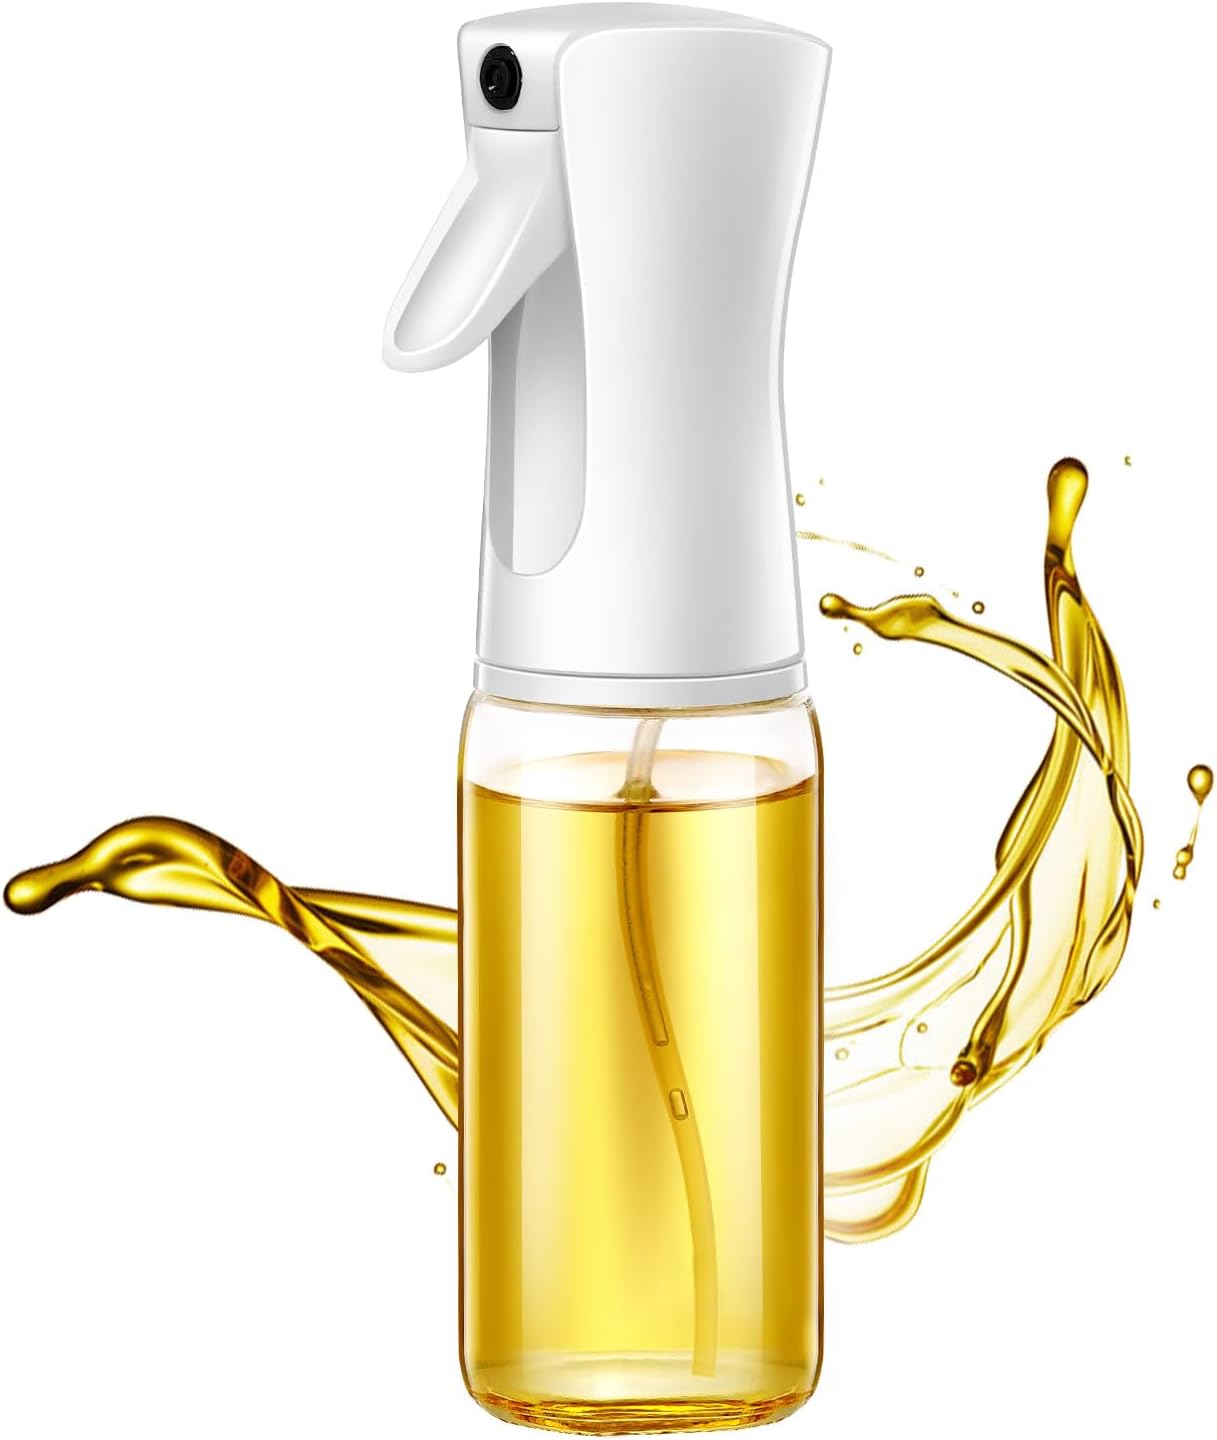 PUZMUG Oil Sprayer for Cooking – 200ml/6.8oz Glass Oil Spray Bottle – Continuous Olive Oil Sprayer with Portion Control – Olive Oil Dispenser Bottle – Kitchen Gadgets for Air Fryer, Salad Making